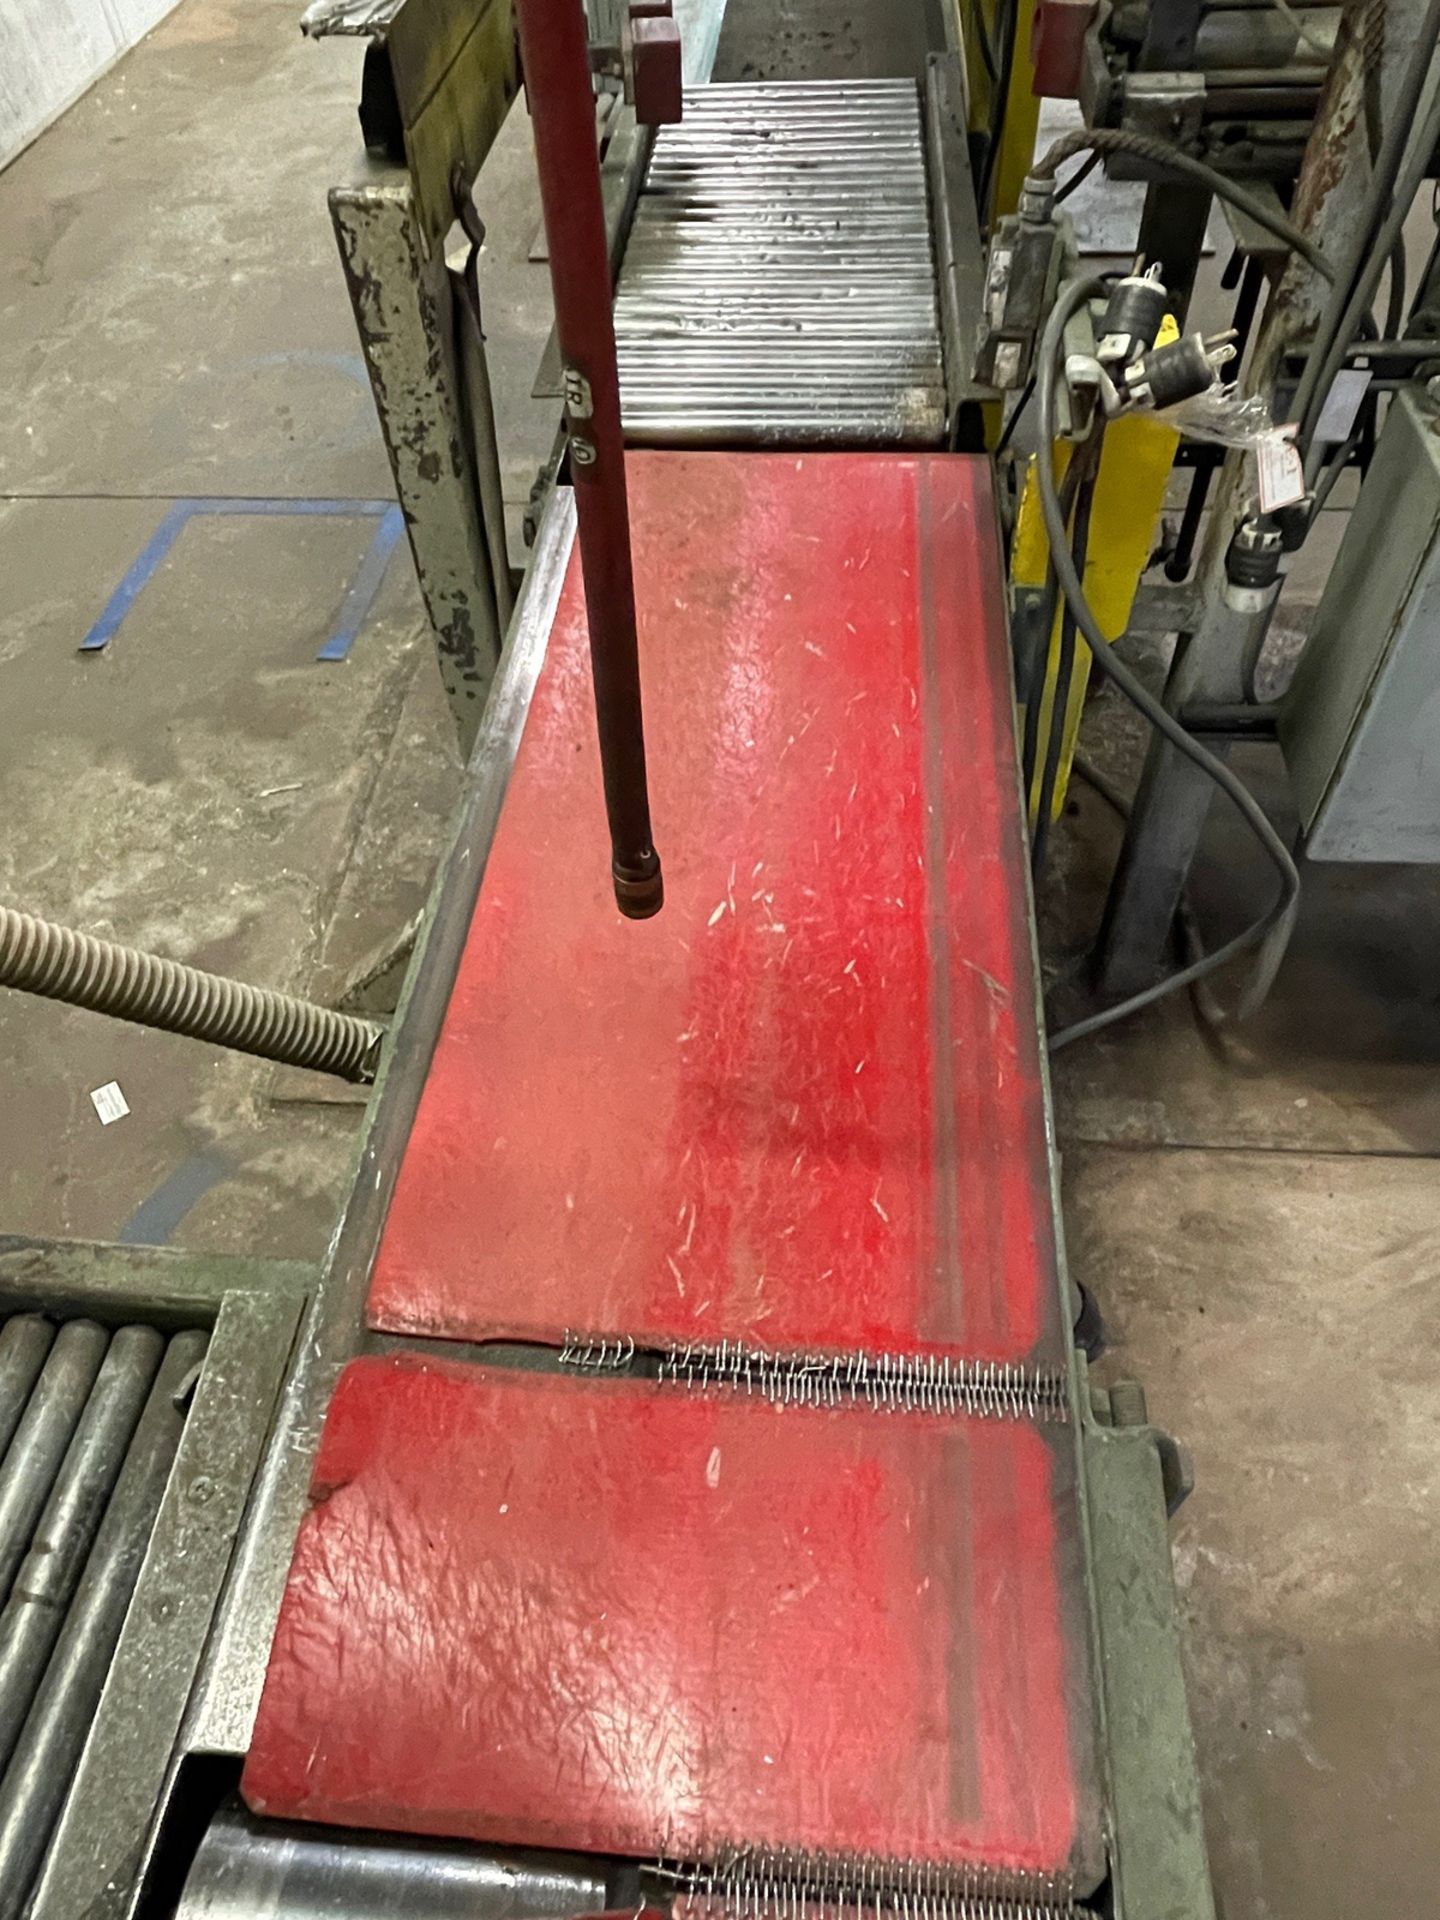 Powered Belt/Steel Roller Conveyor, Approx. 14" x 7' | Rig Fee $50 - Image 2 of 3